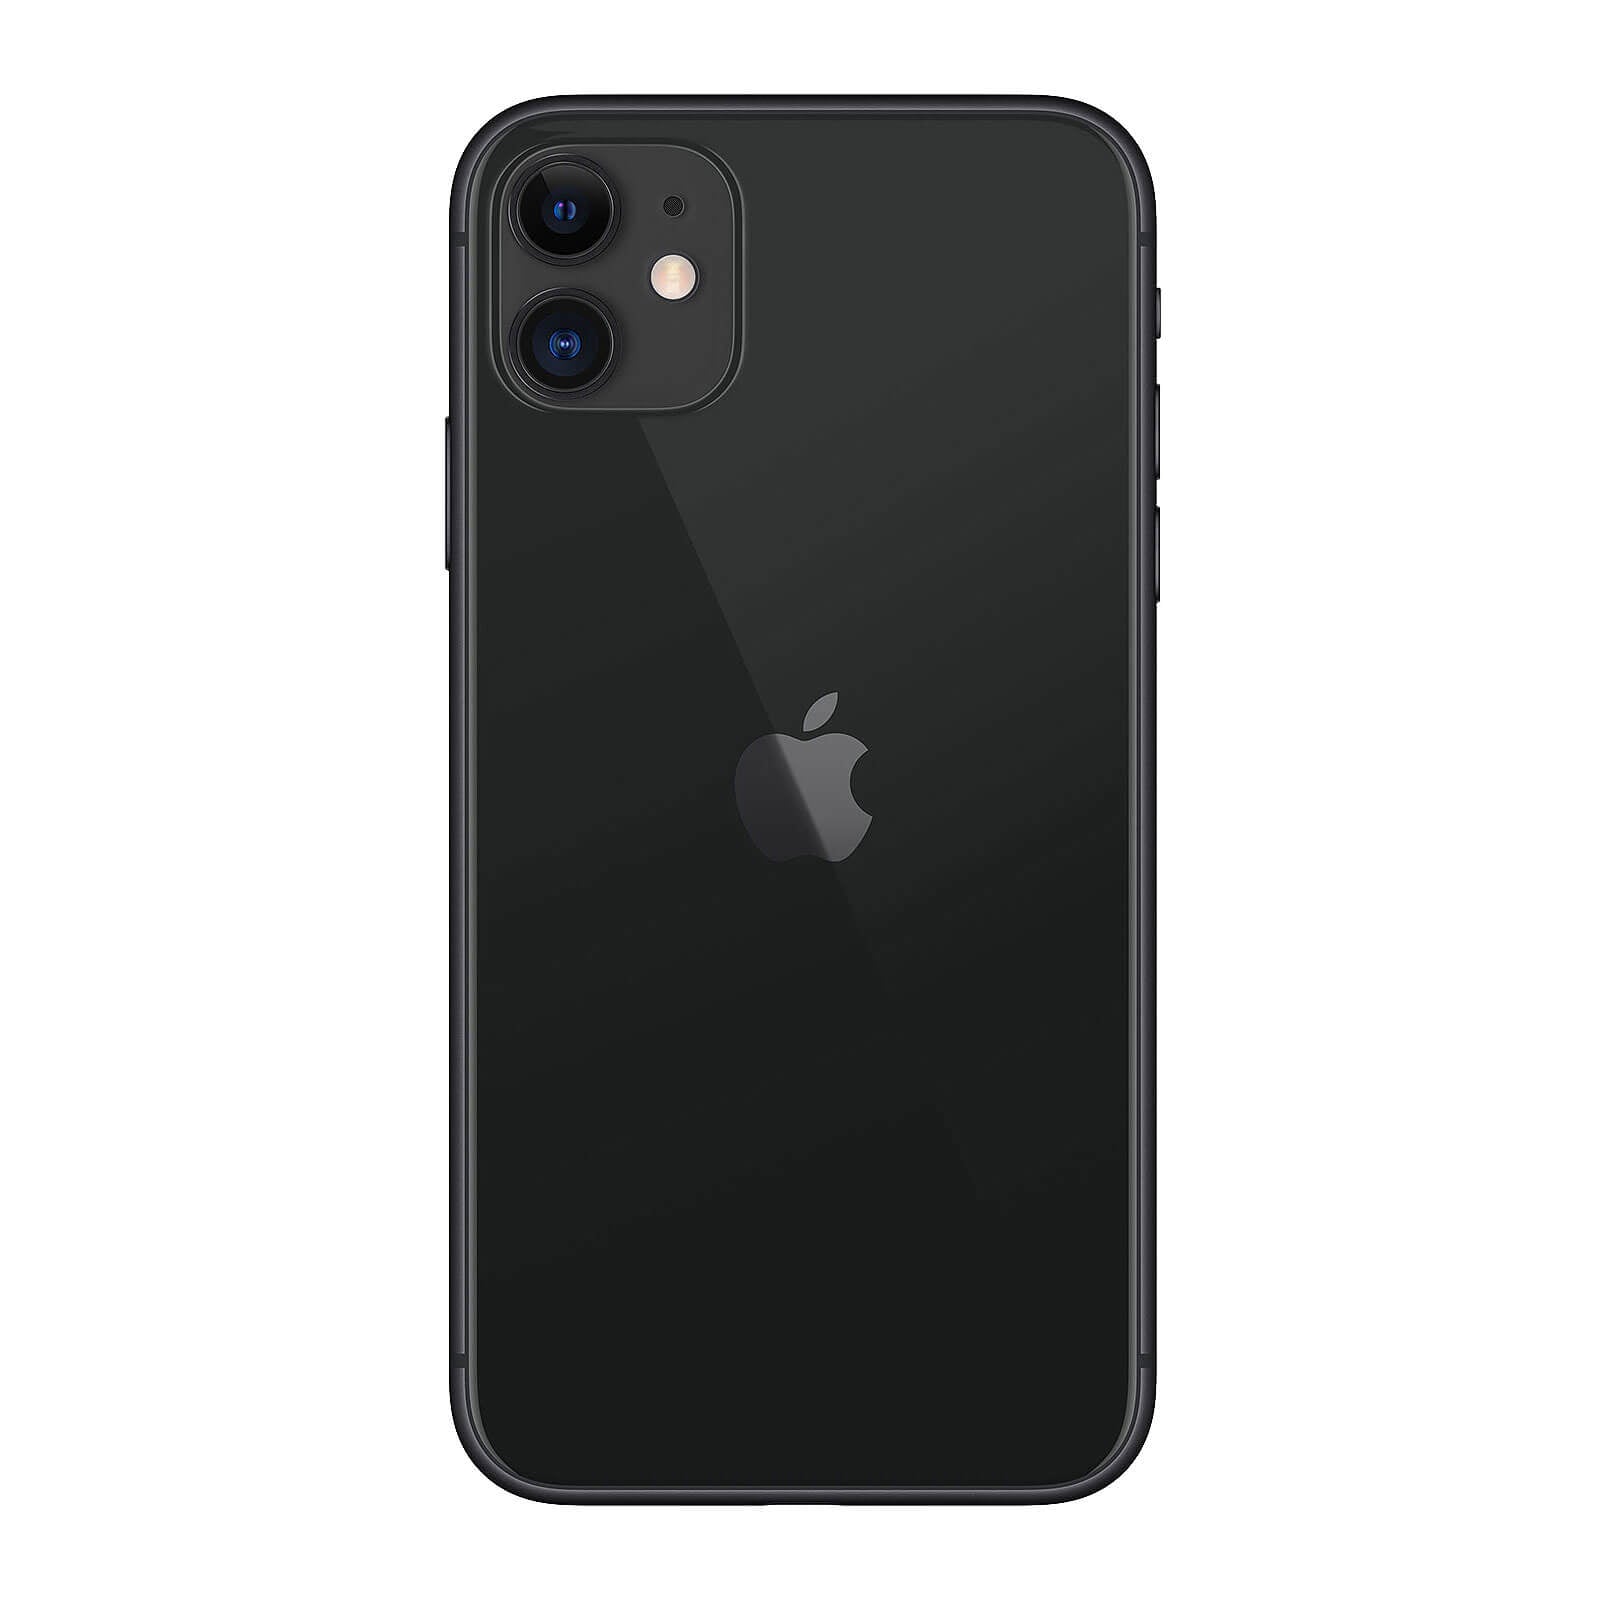 Apple iPhone 11 256GB Black Good - AT&T